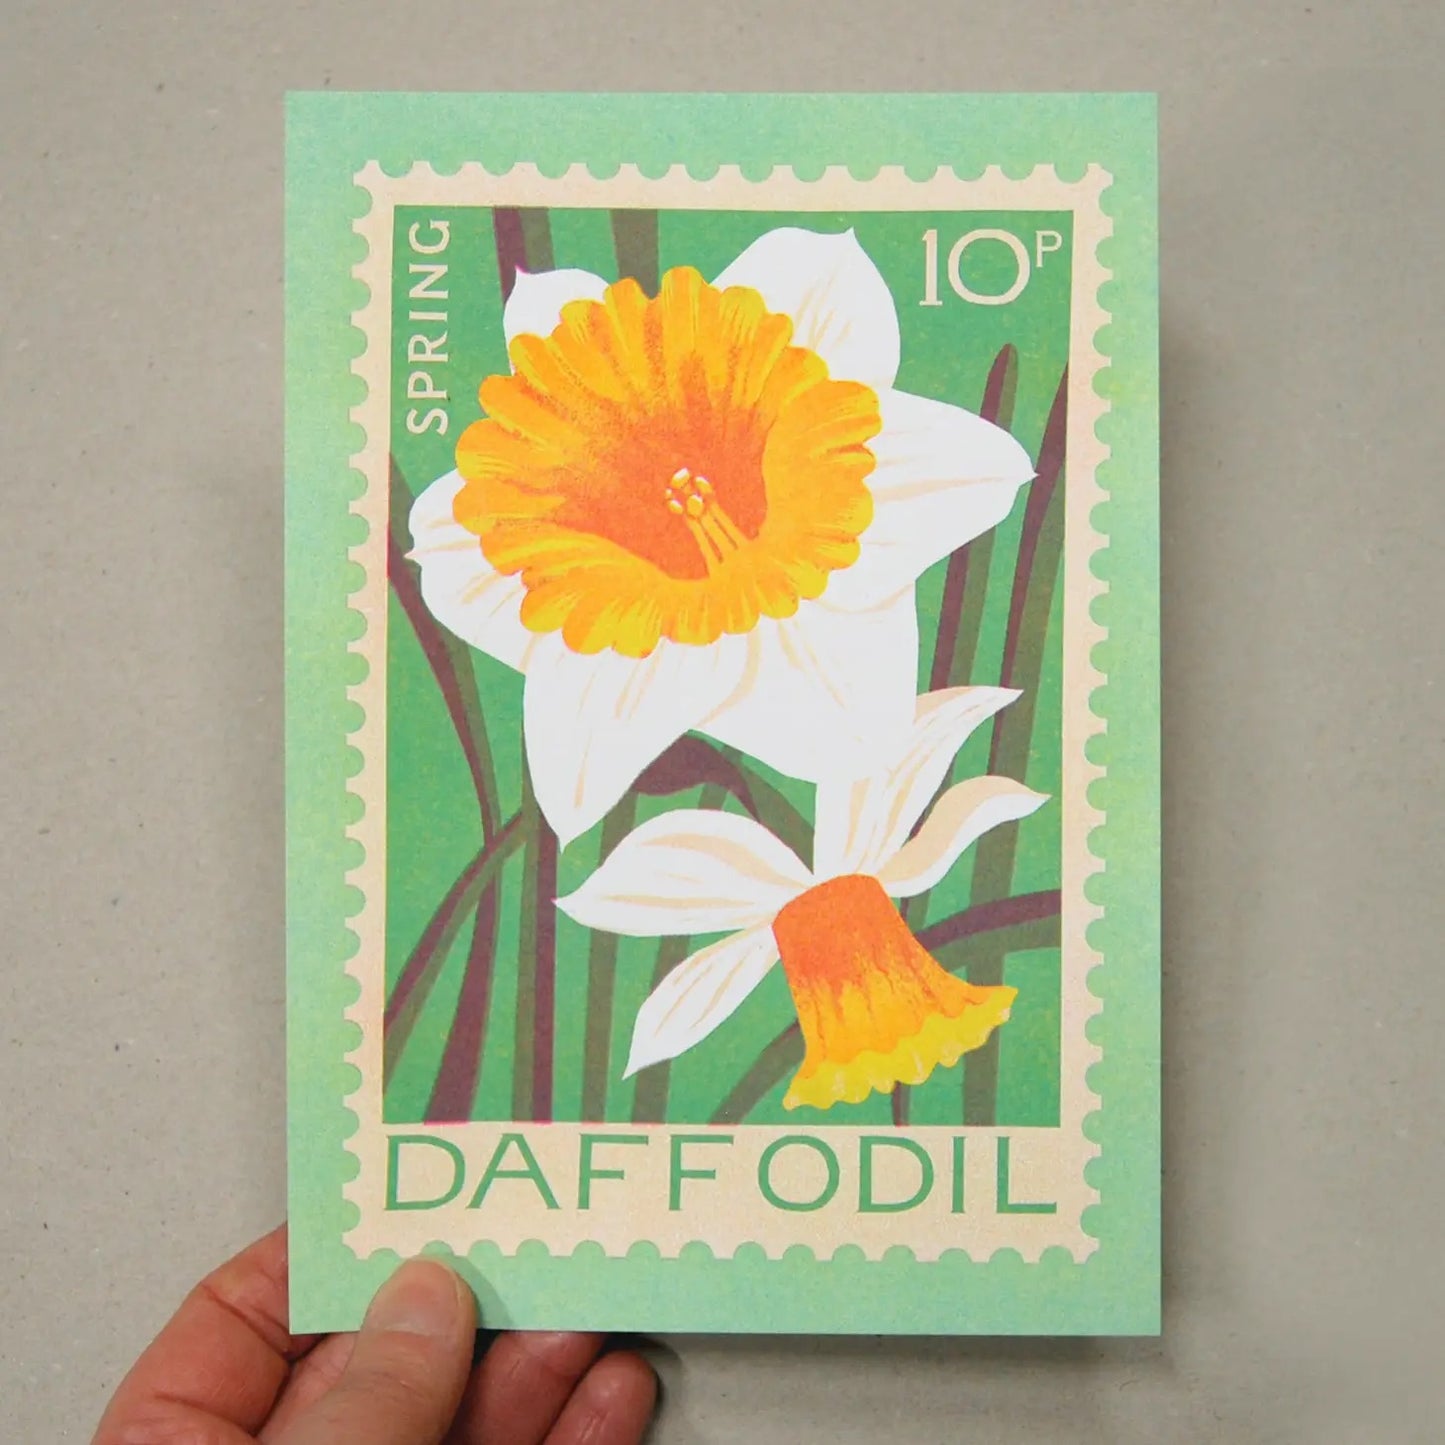 Daffodil A5 risograph print